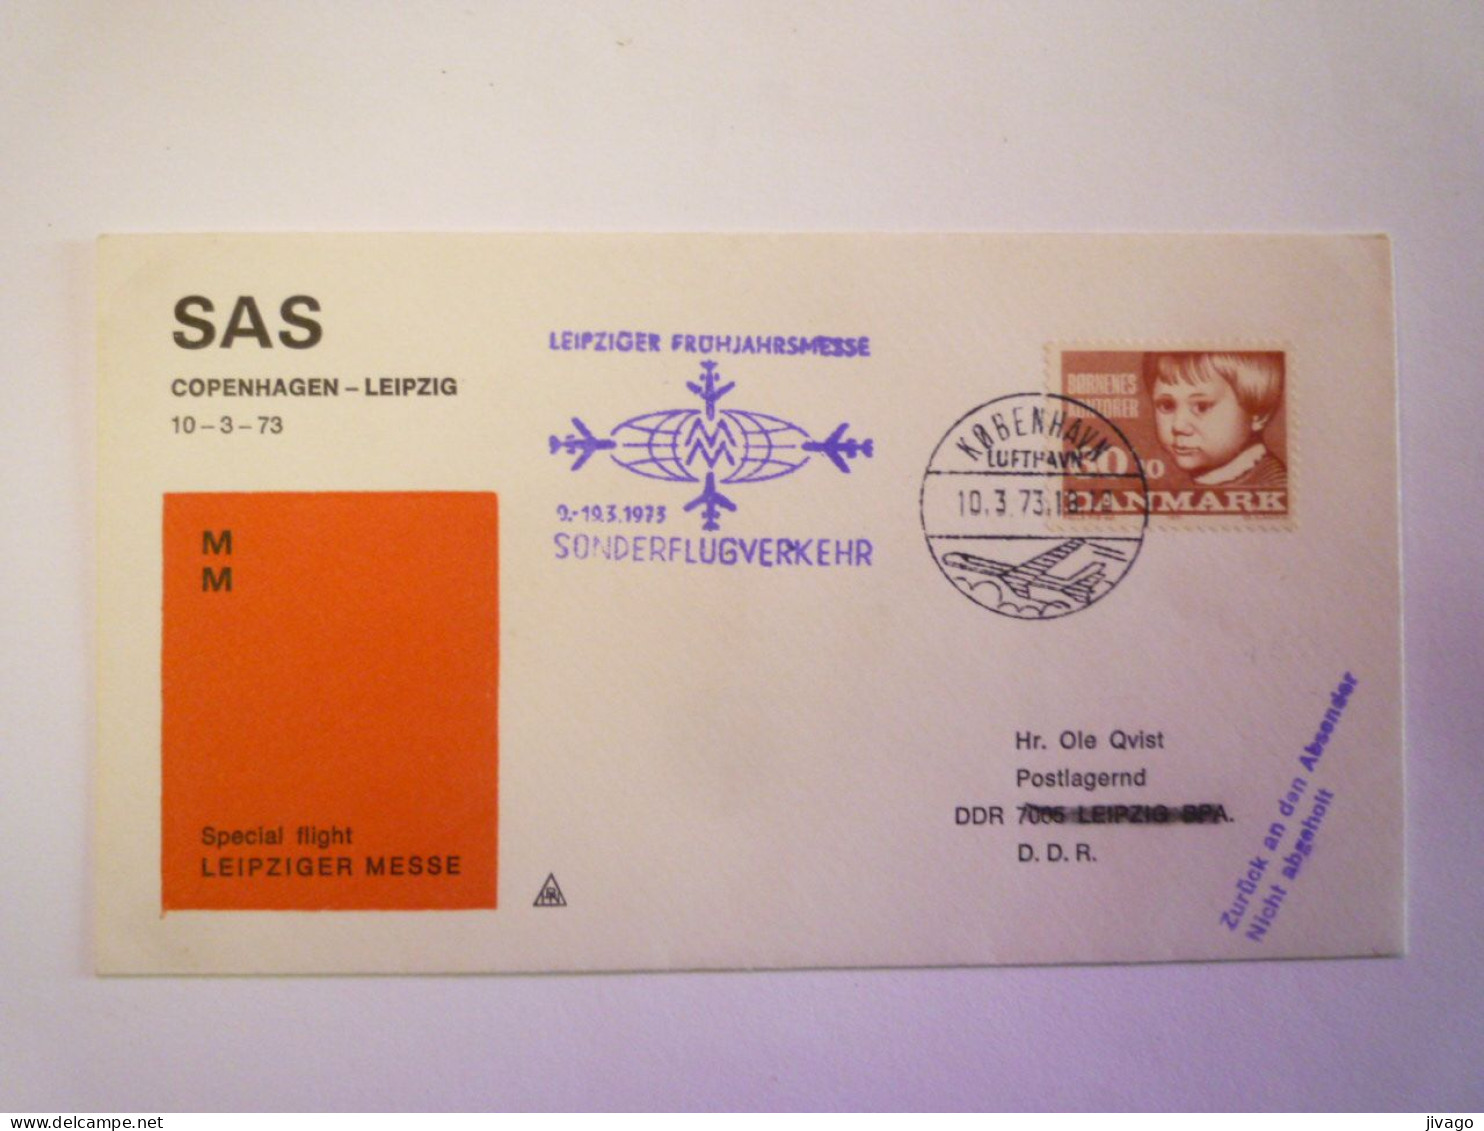 2024 - 609  SAS  COPENHAGEN  -  LEIPZIG  Special Flight  LEIPZIGER MESSE   1973    XXX - Posta Aerea